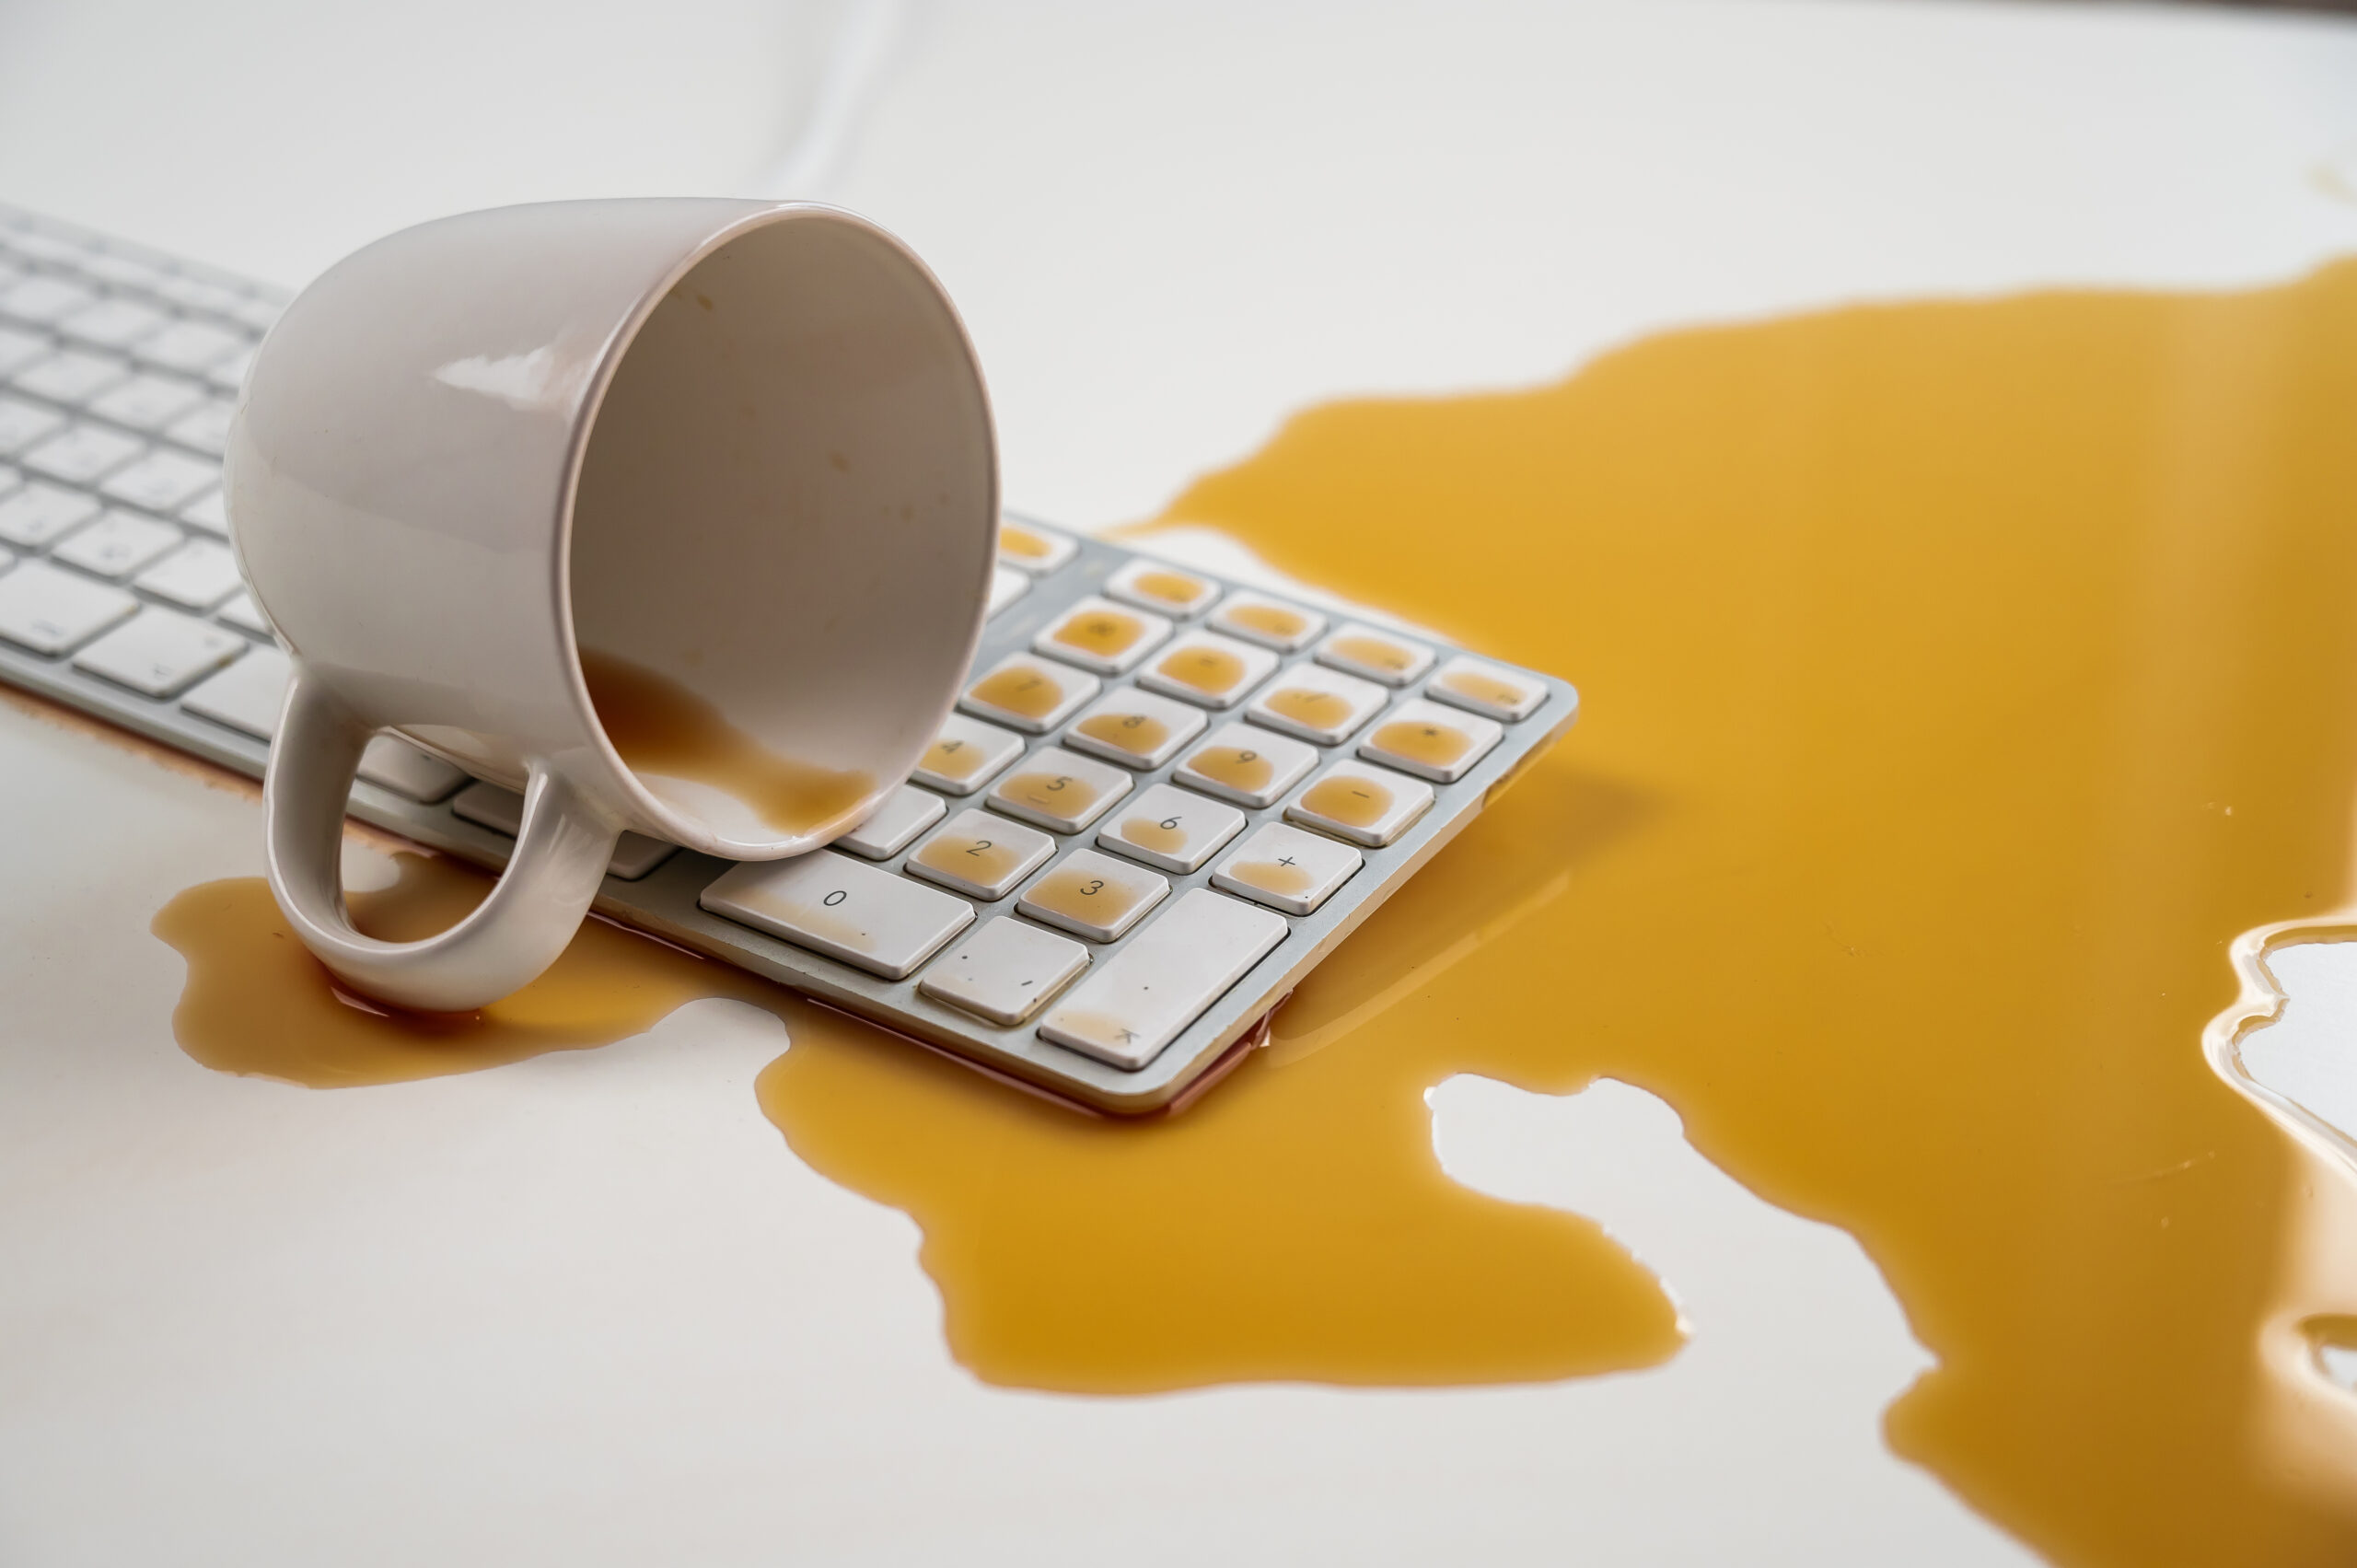 java coffee spill on keyboard